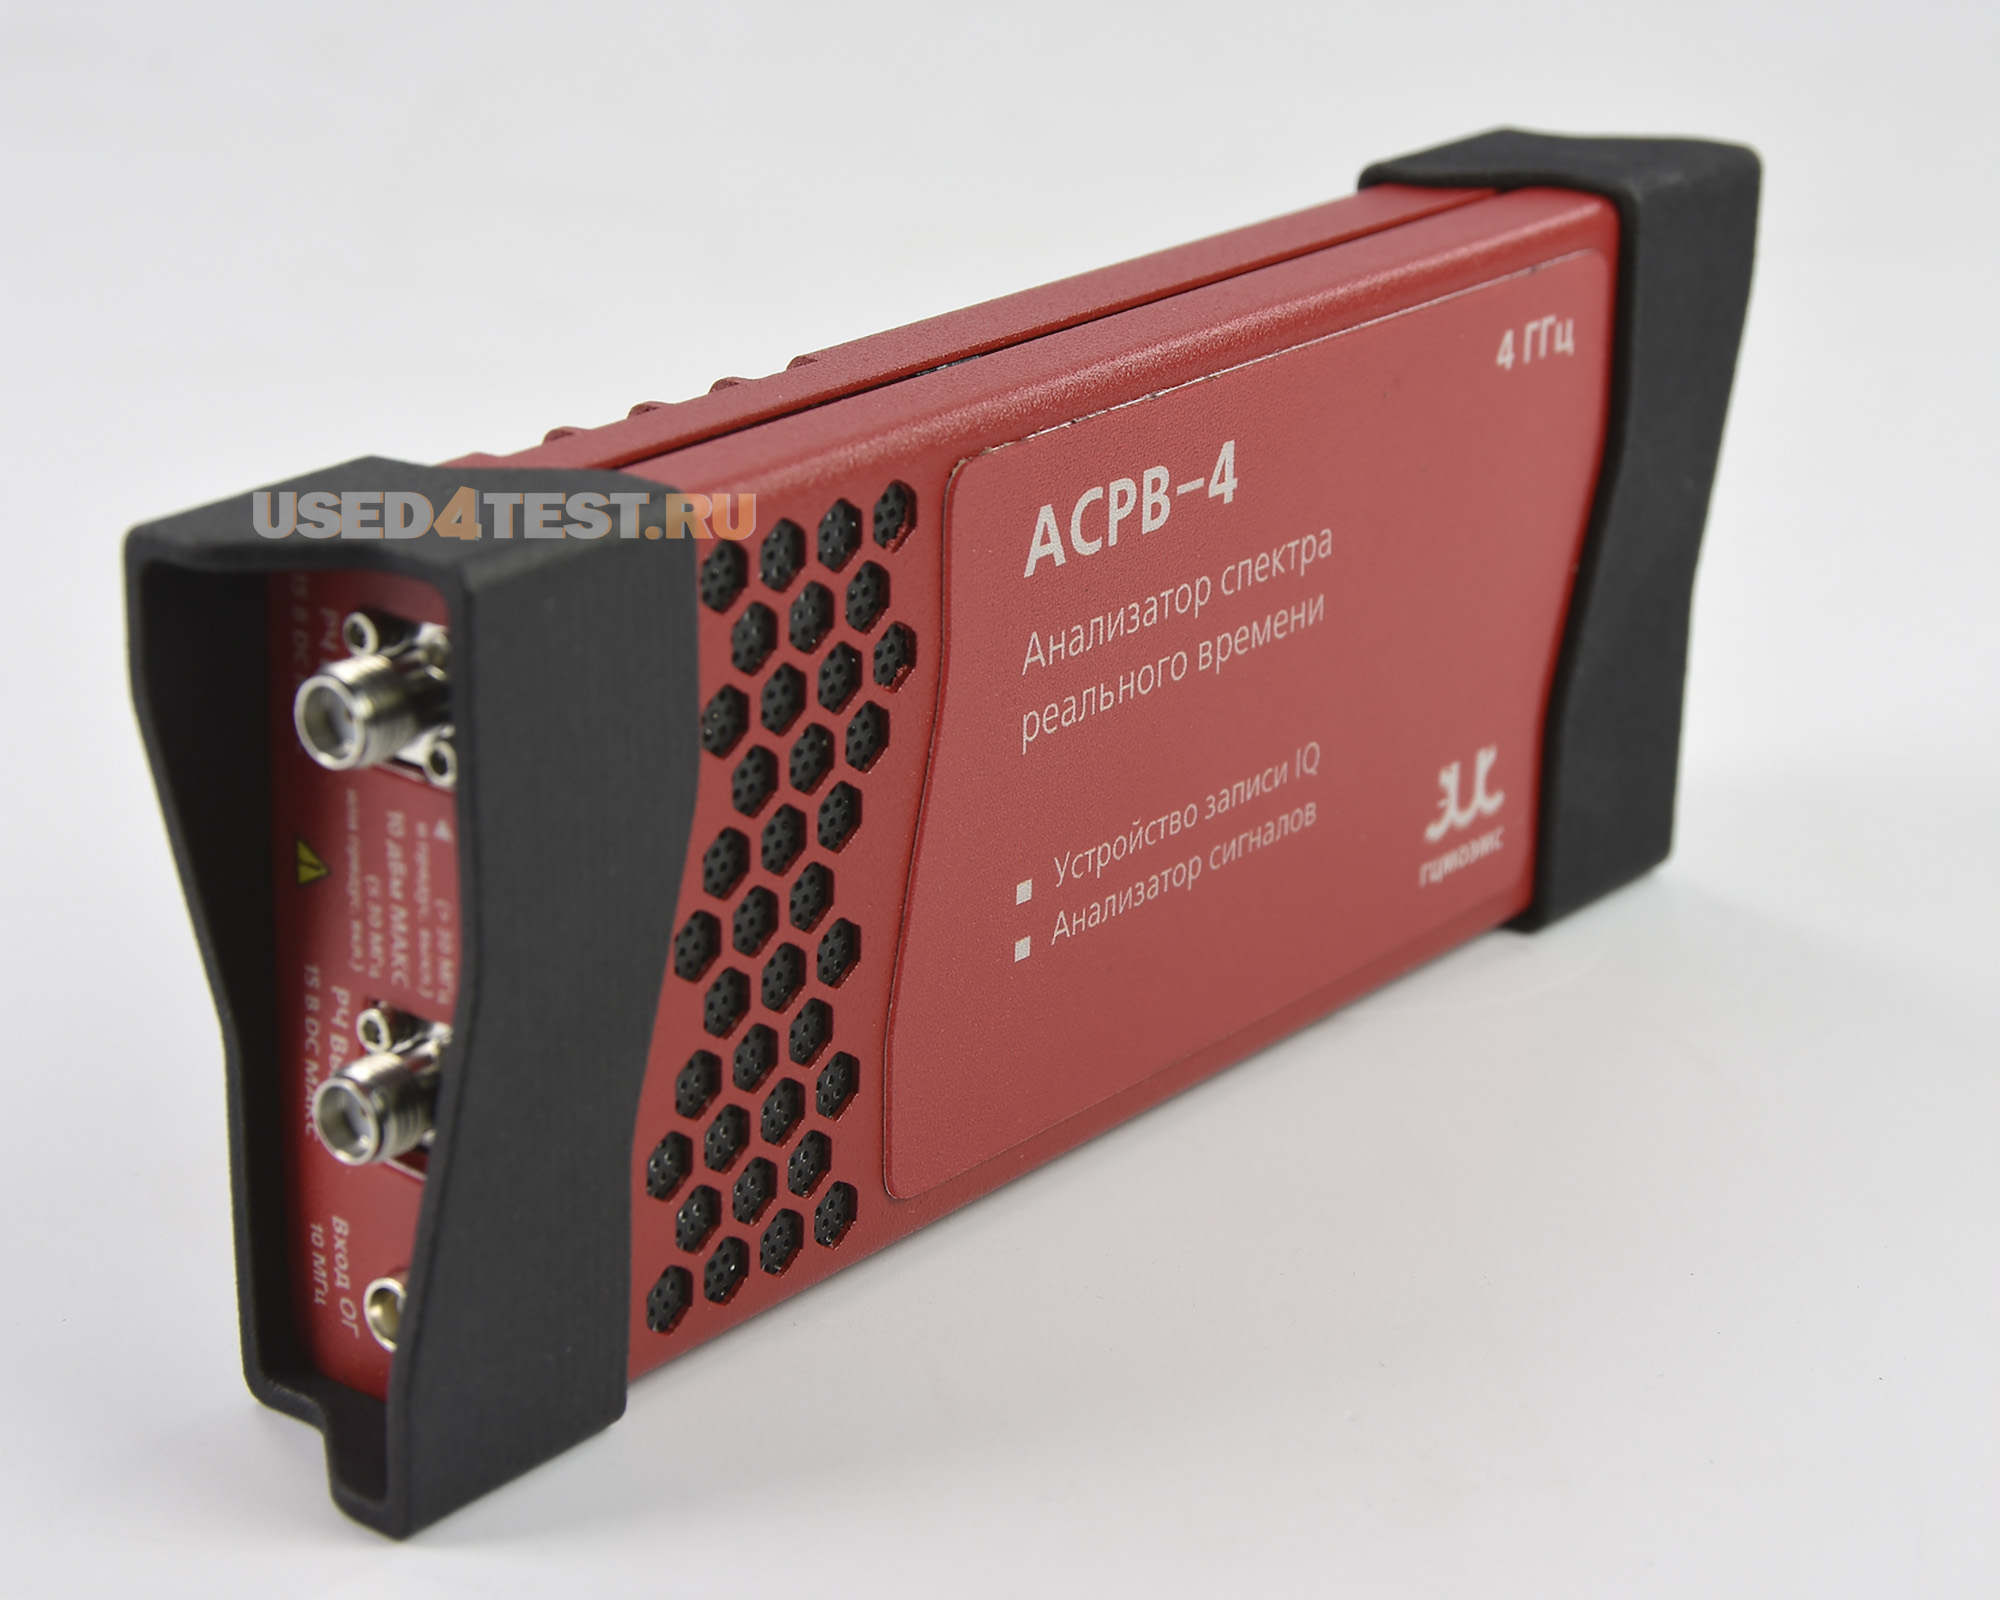 Анализатор спектра реального времени
 ГЦМО ЭМС АСРВ-4
с диапазоном от 9 кГц до 4,5 ГГц/6,3 ГГц